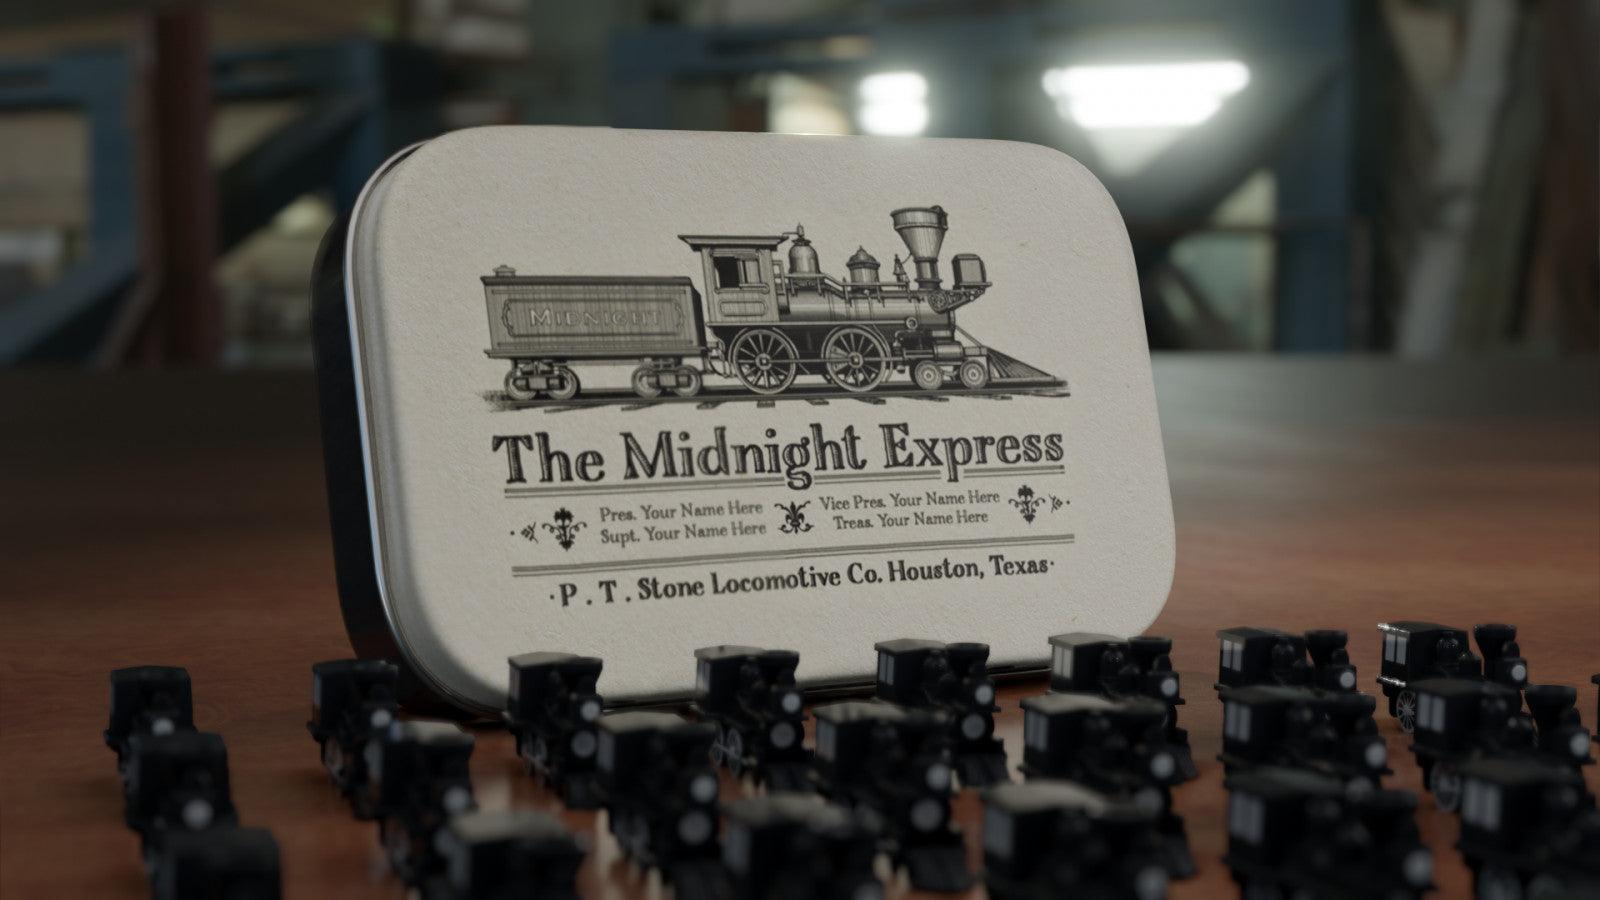 VR-92336 Deluxe Board Game Train Sets - The Midnight Express - Little Plastic Train - Titan Pop Culture